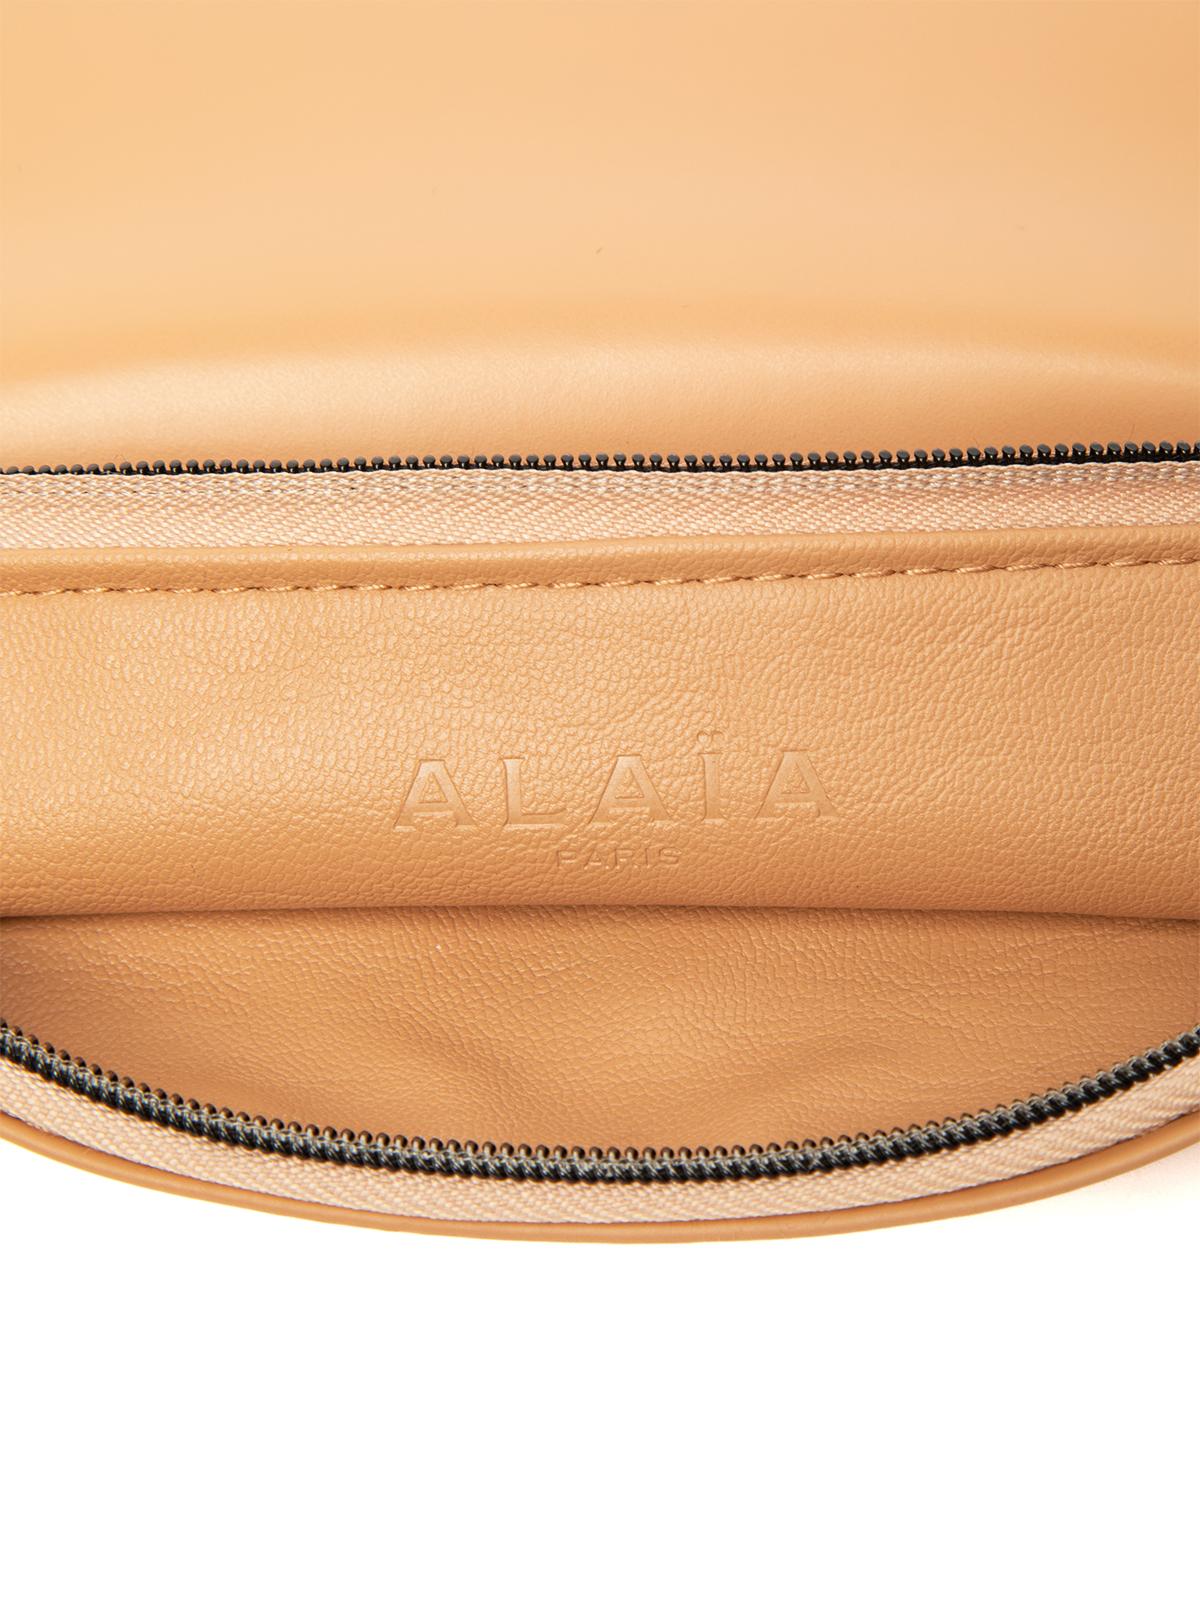 Pre-Loved Alaïa Women's Alaia Clutch bag 4